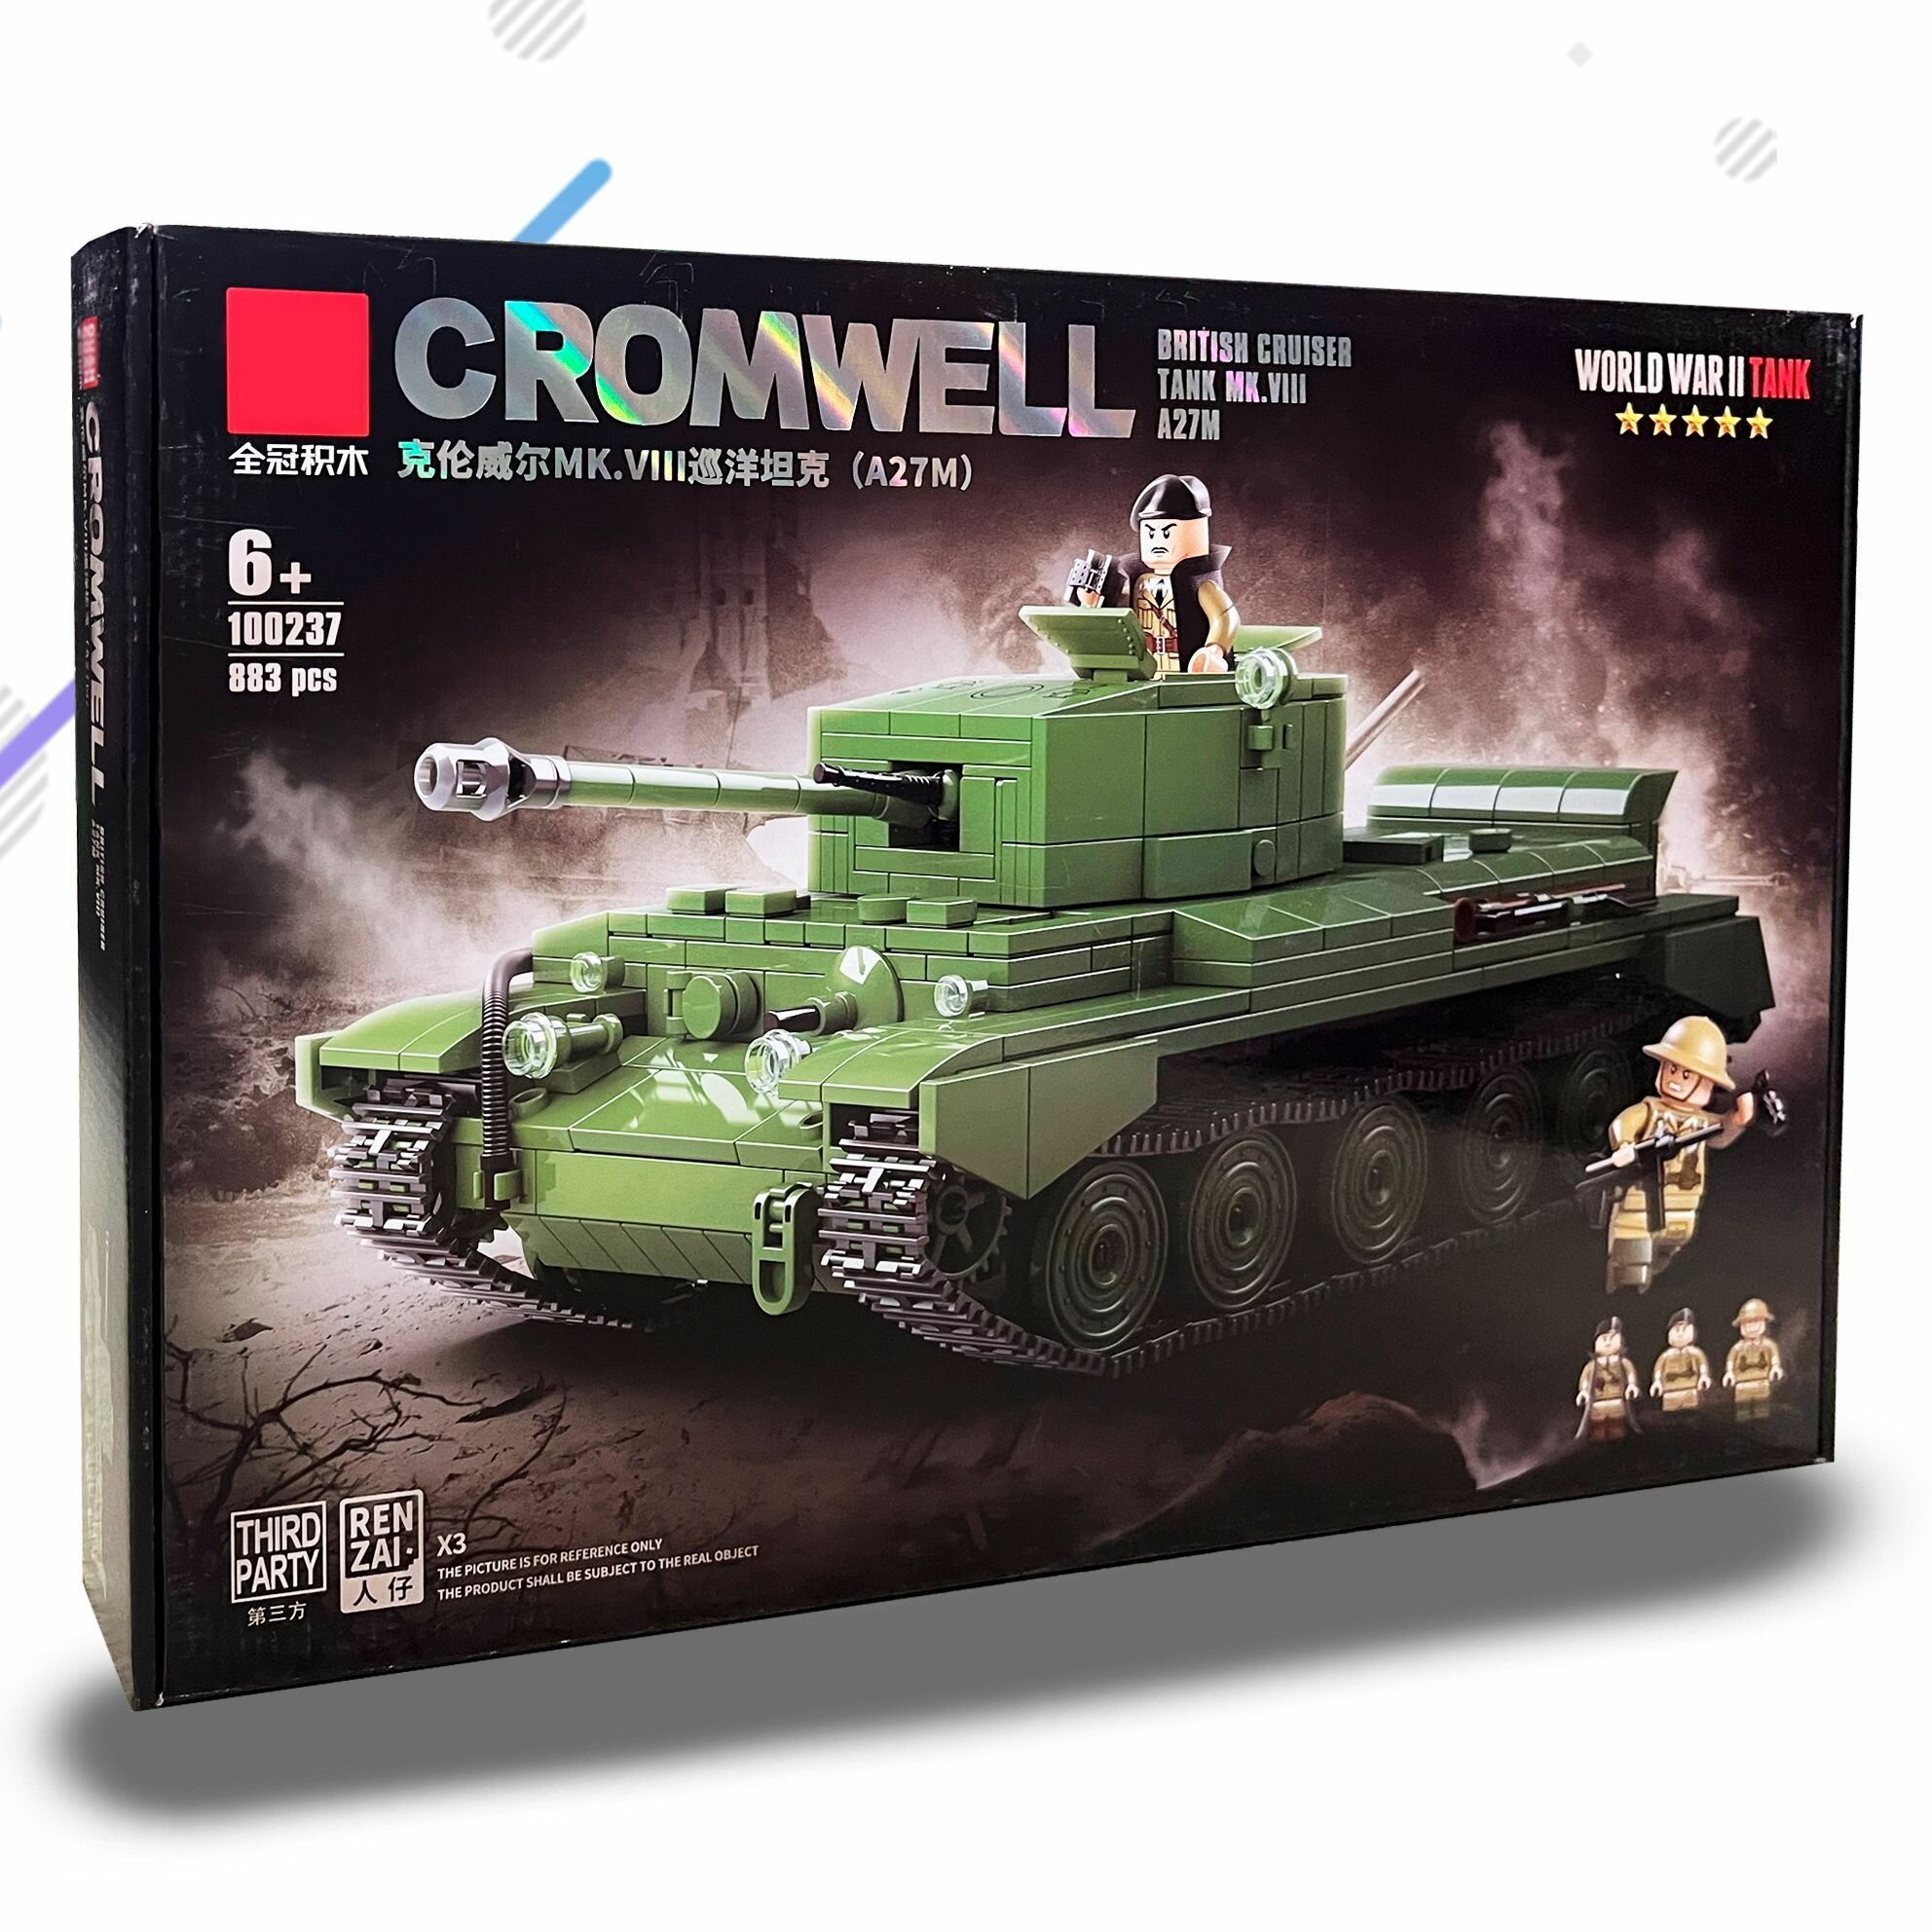 Конструктор Крейсерский танк COROMWELL 100237 Кромвель MK VIII A27M Набор 883 детали